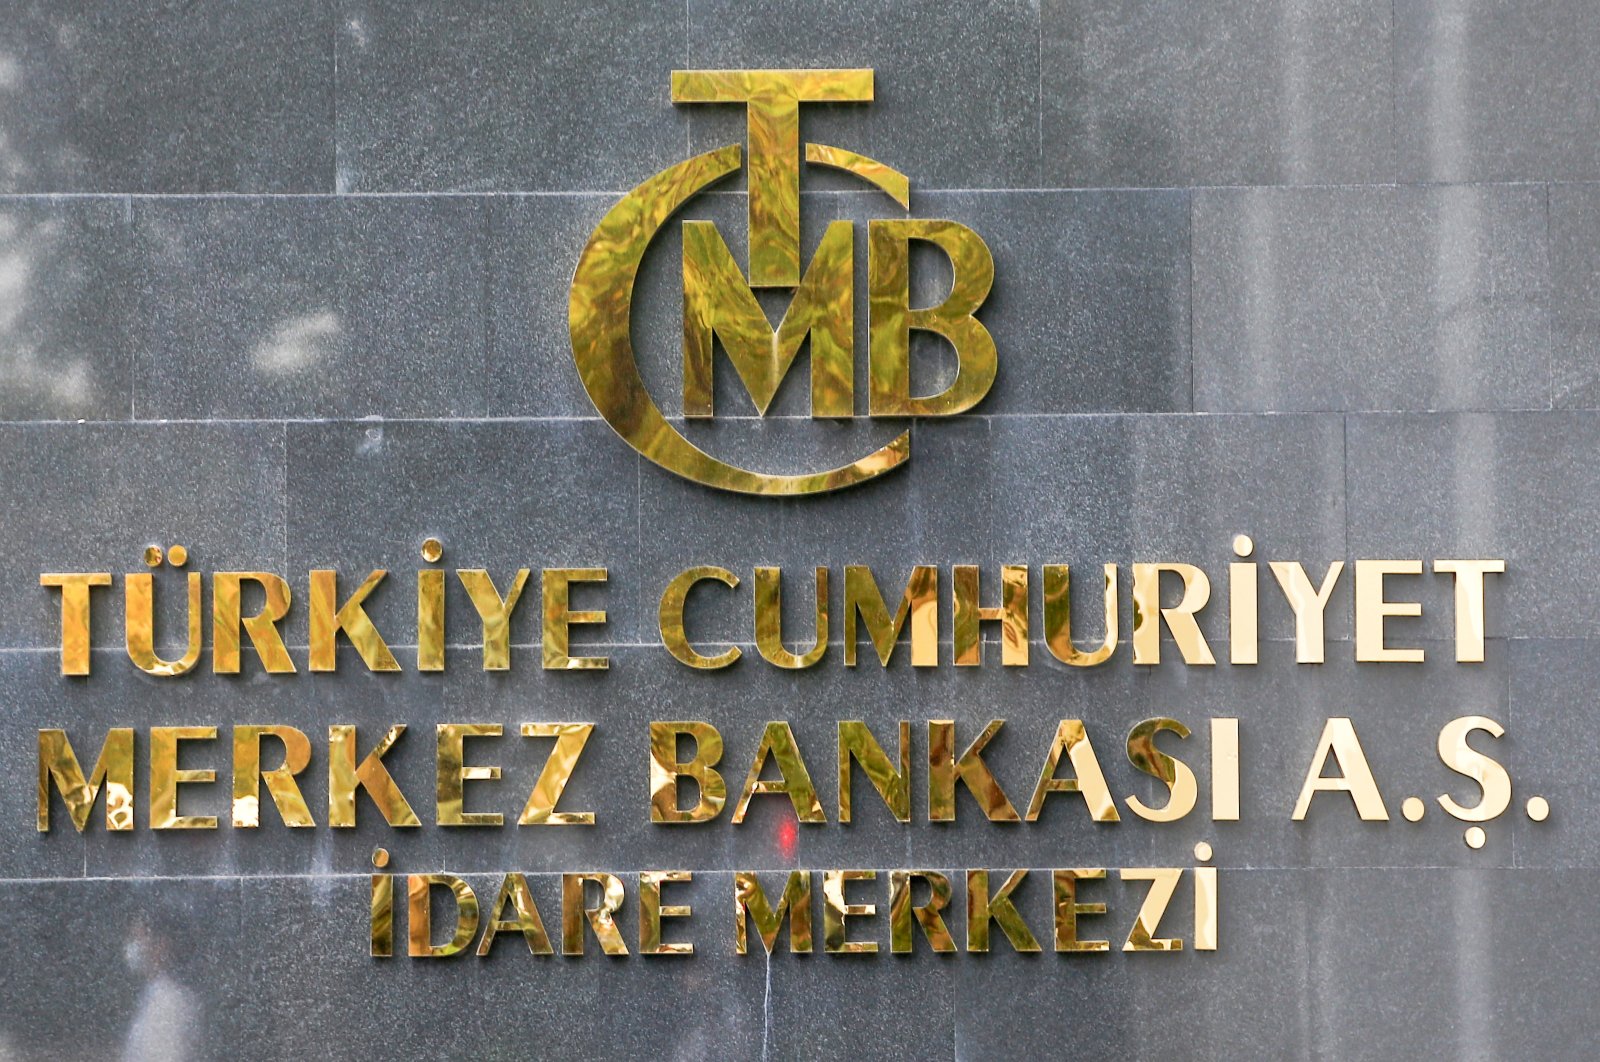 Bank sentral Turki menurunkan suku bunga cadangan wajib lira menjadi nol